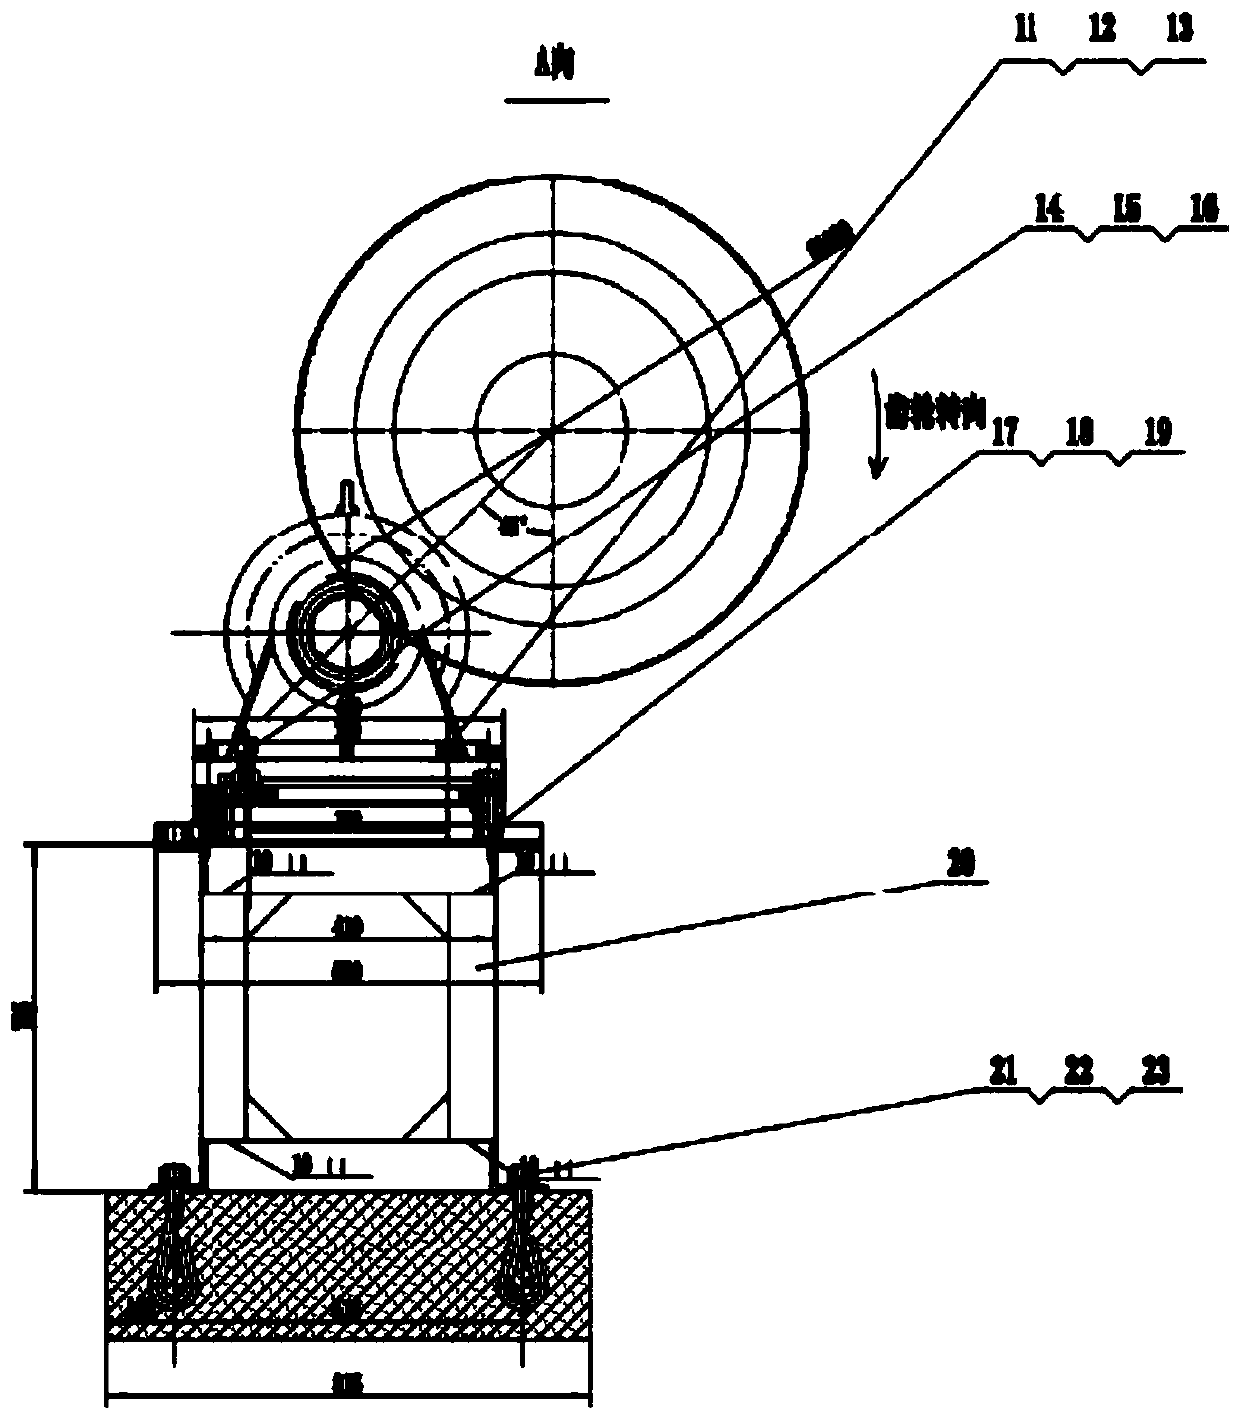 Air compressor jigger convenient to operate